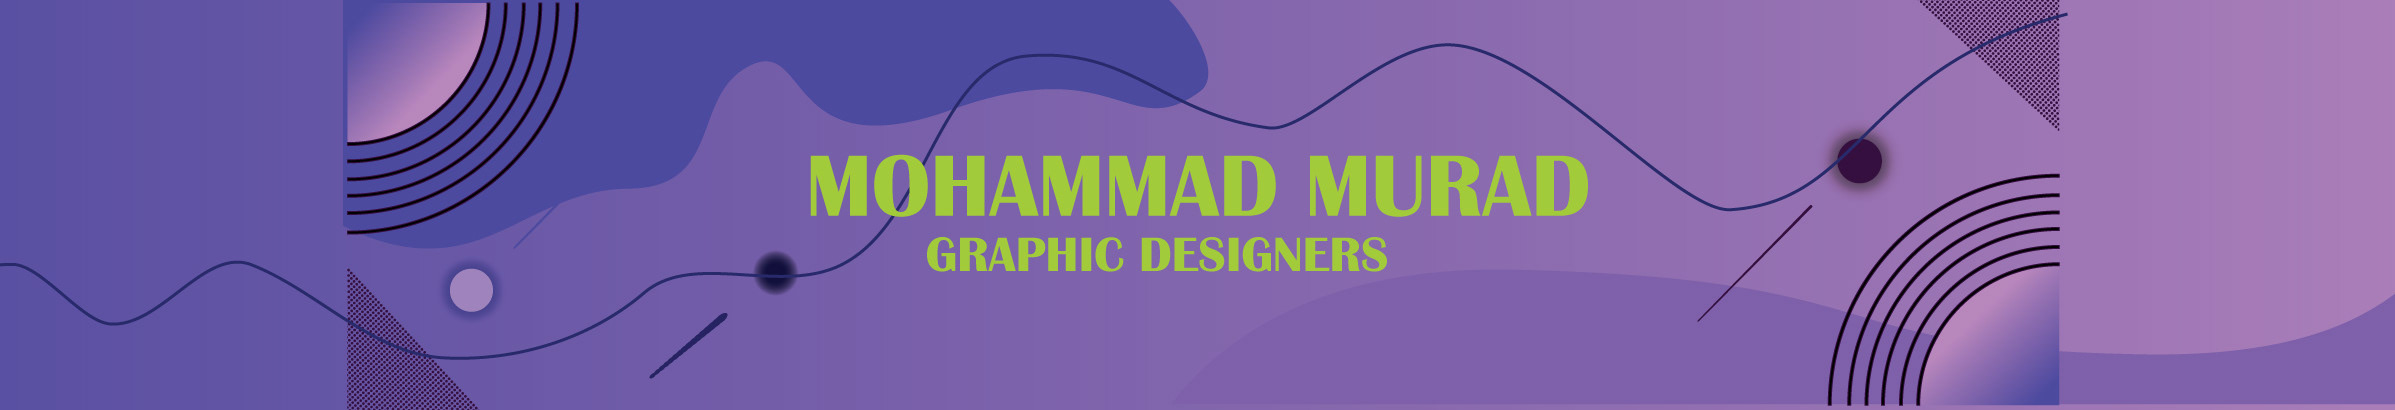 Mohammad Murad's profile banner